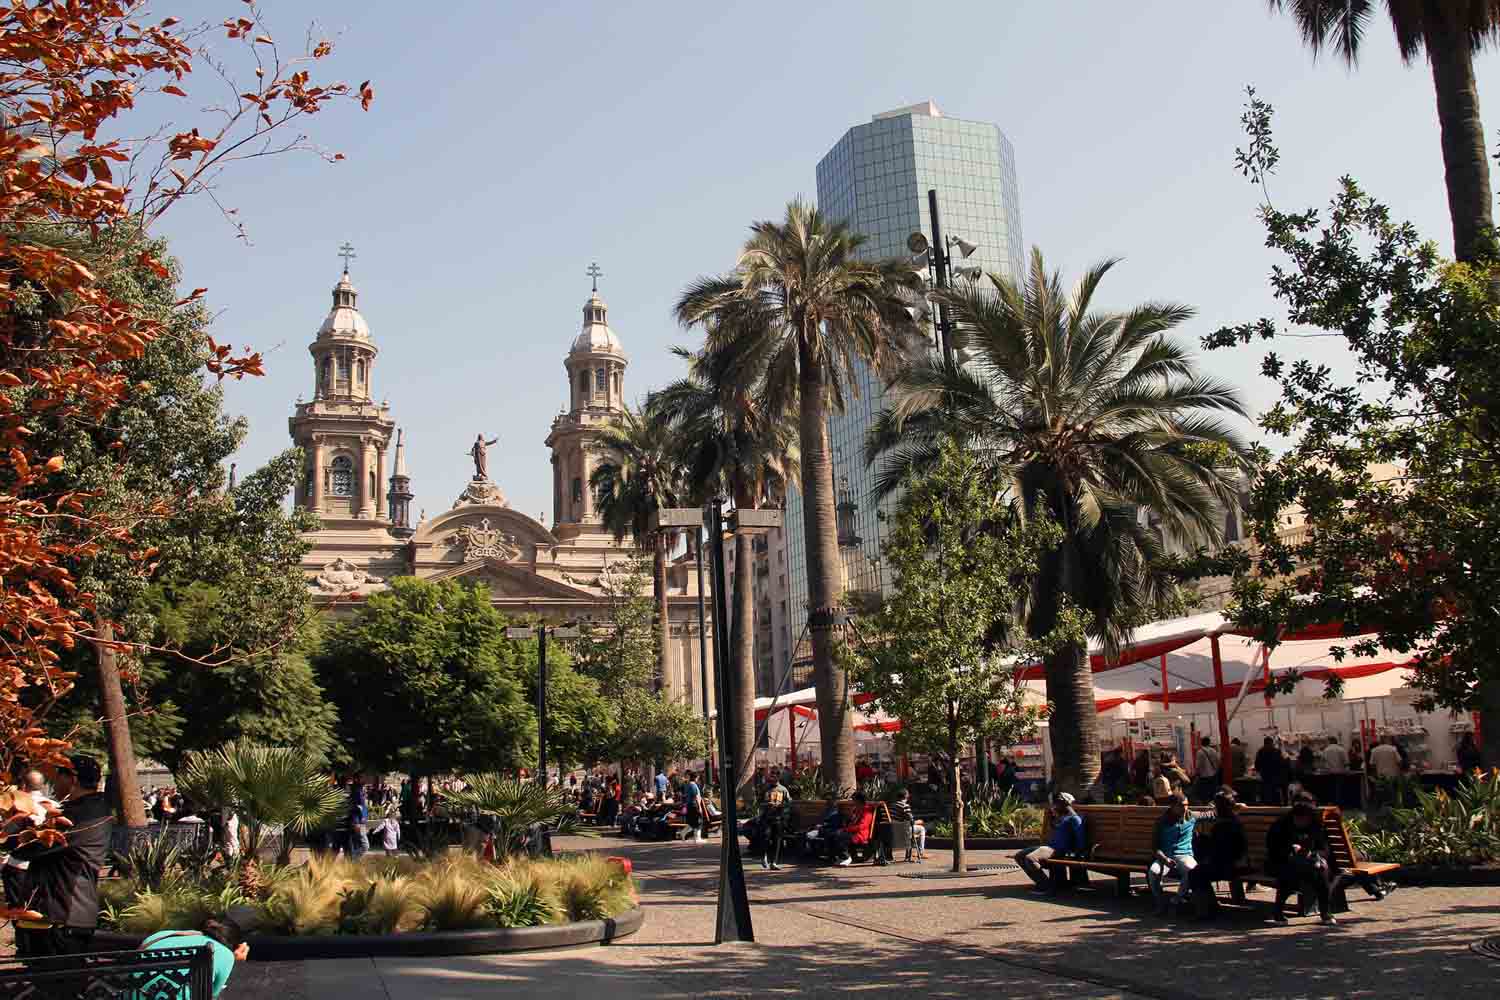 Santiago city center